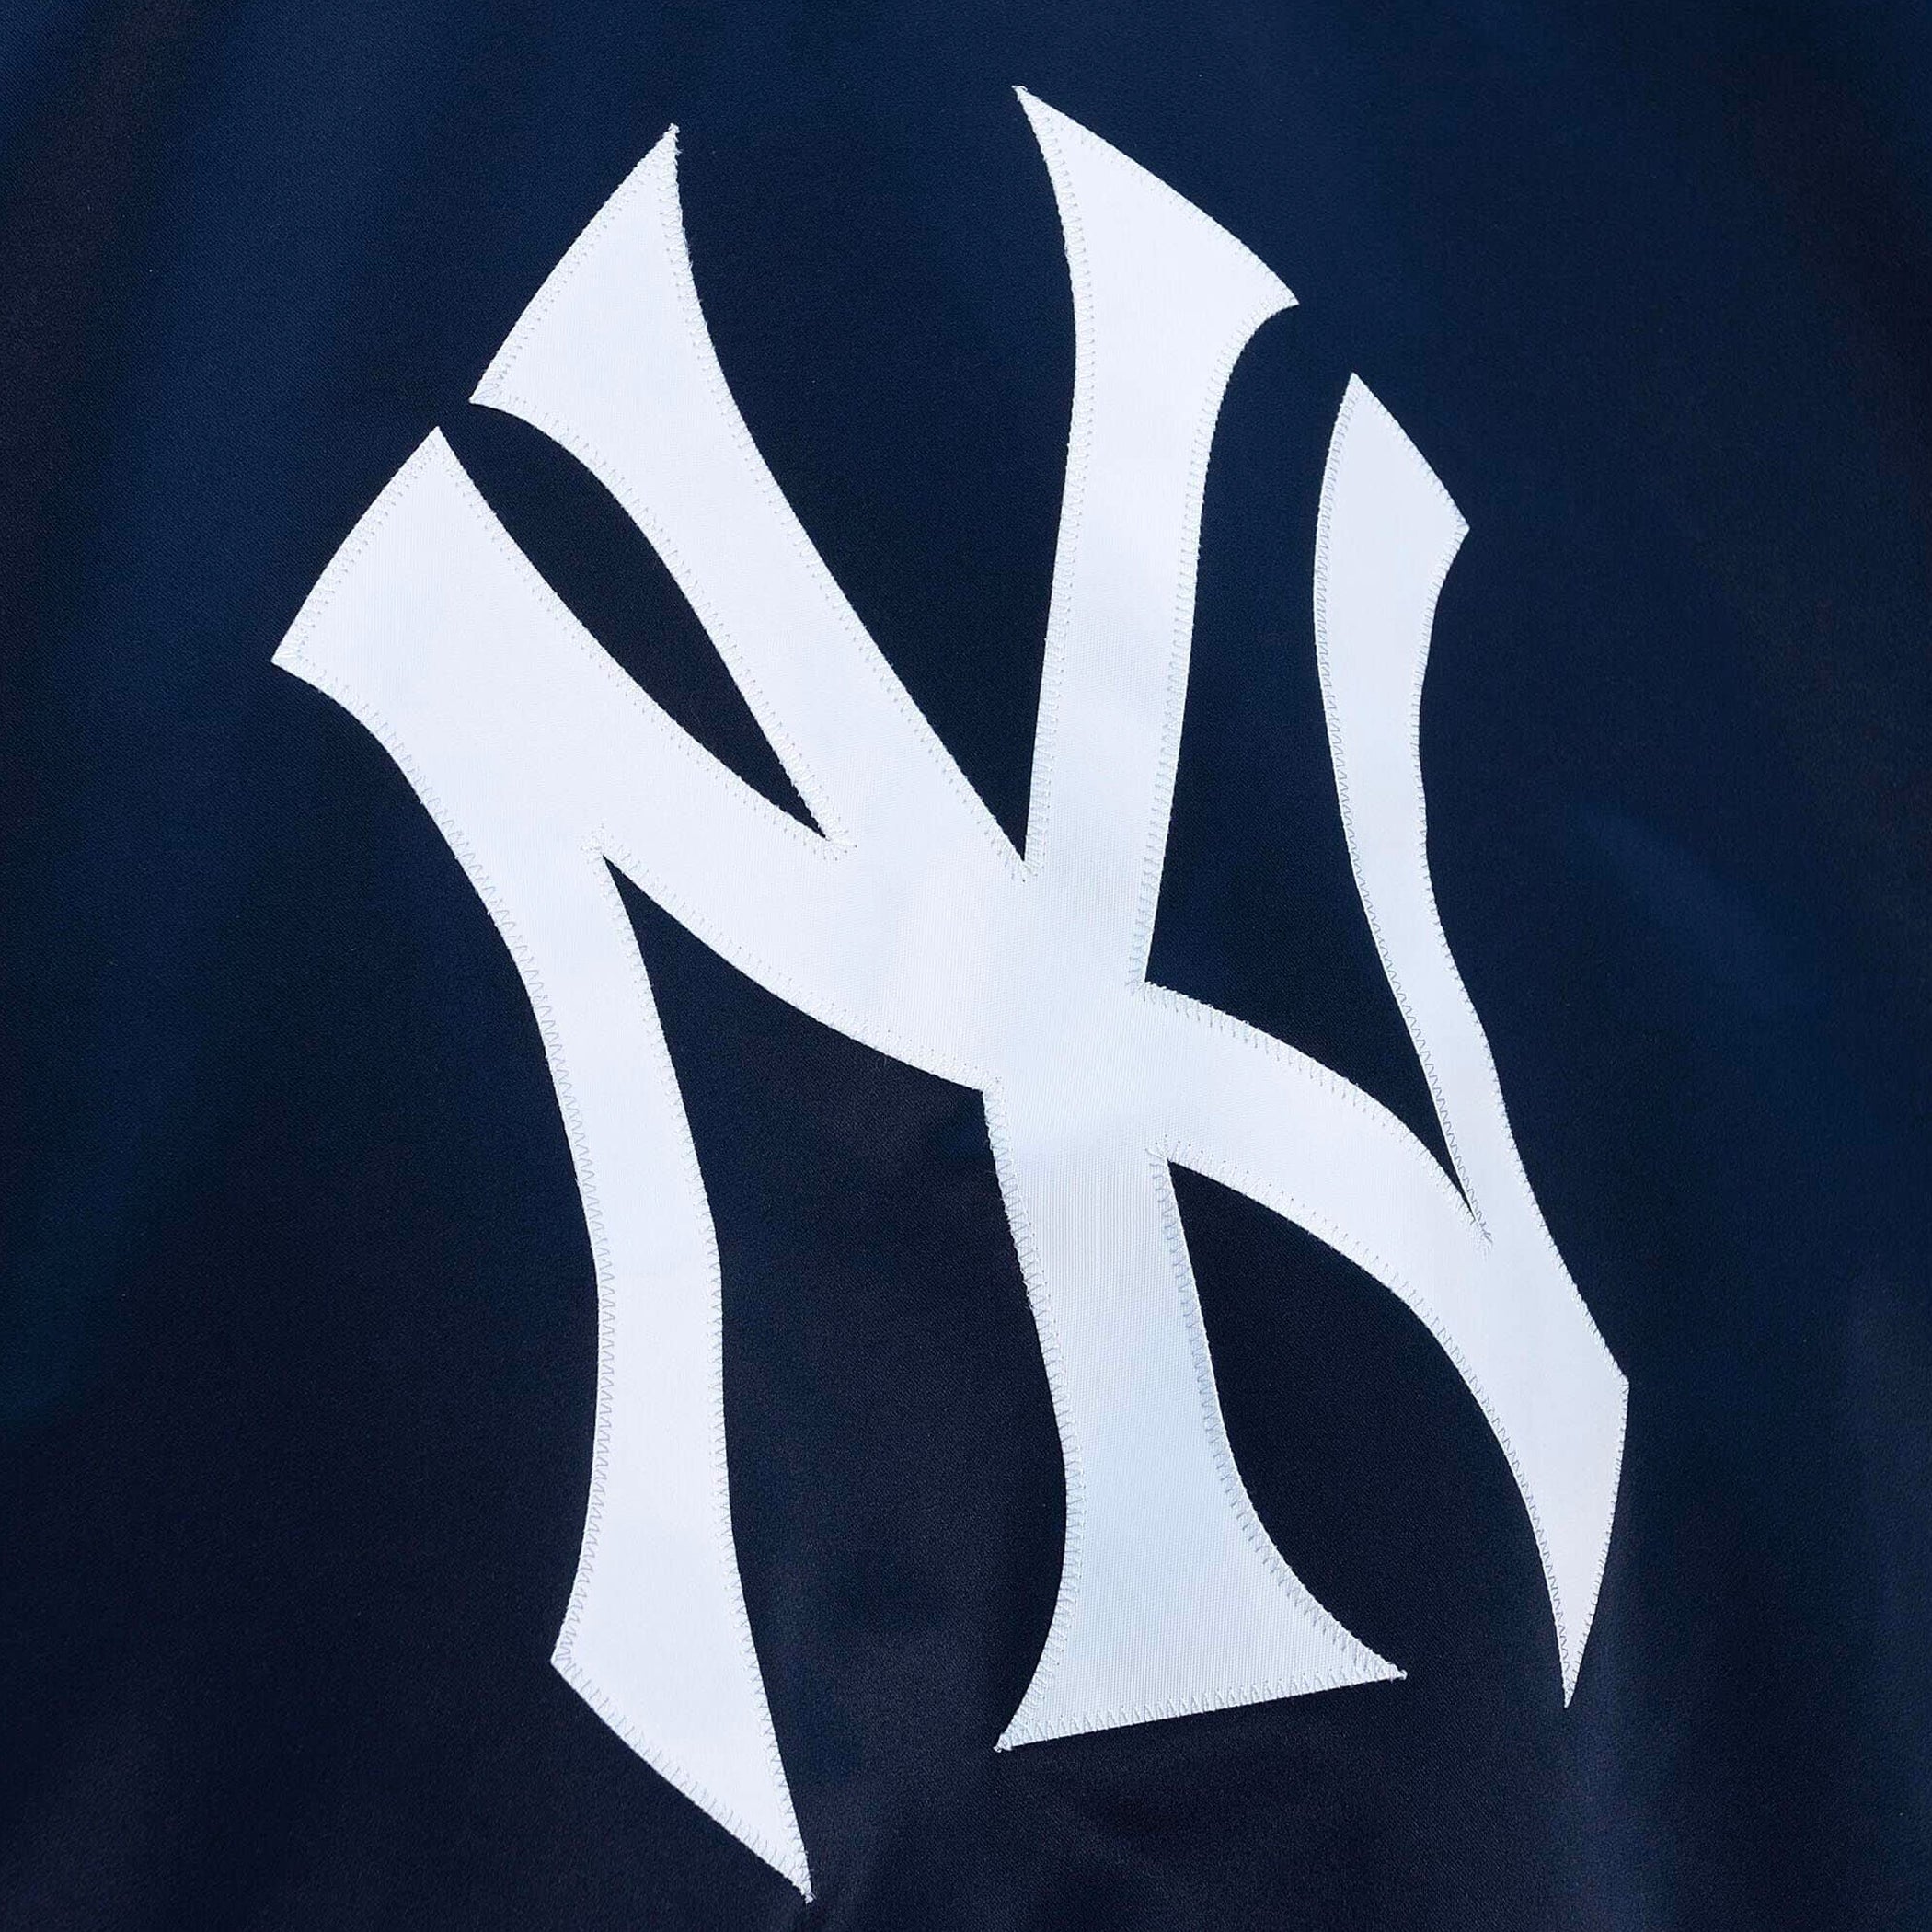 MITCHELL & NESS - Men - New York Yankees Satin Jacket - Black